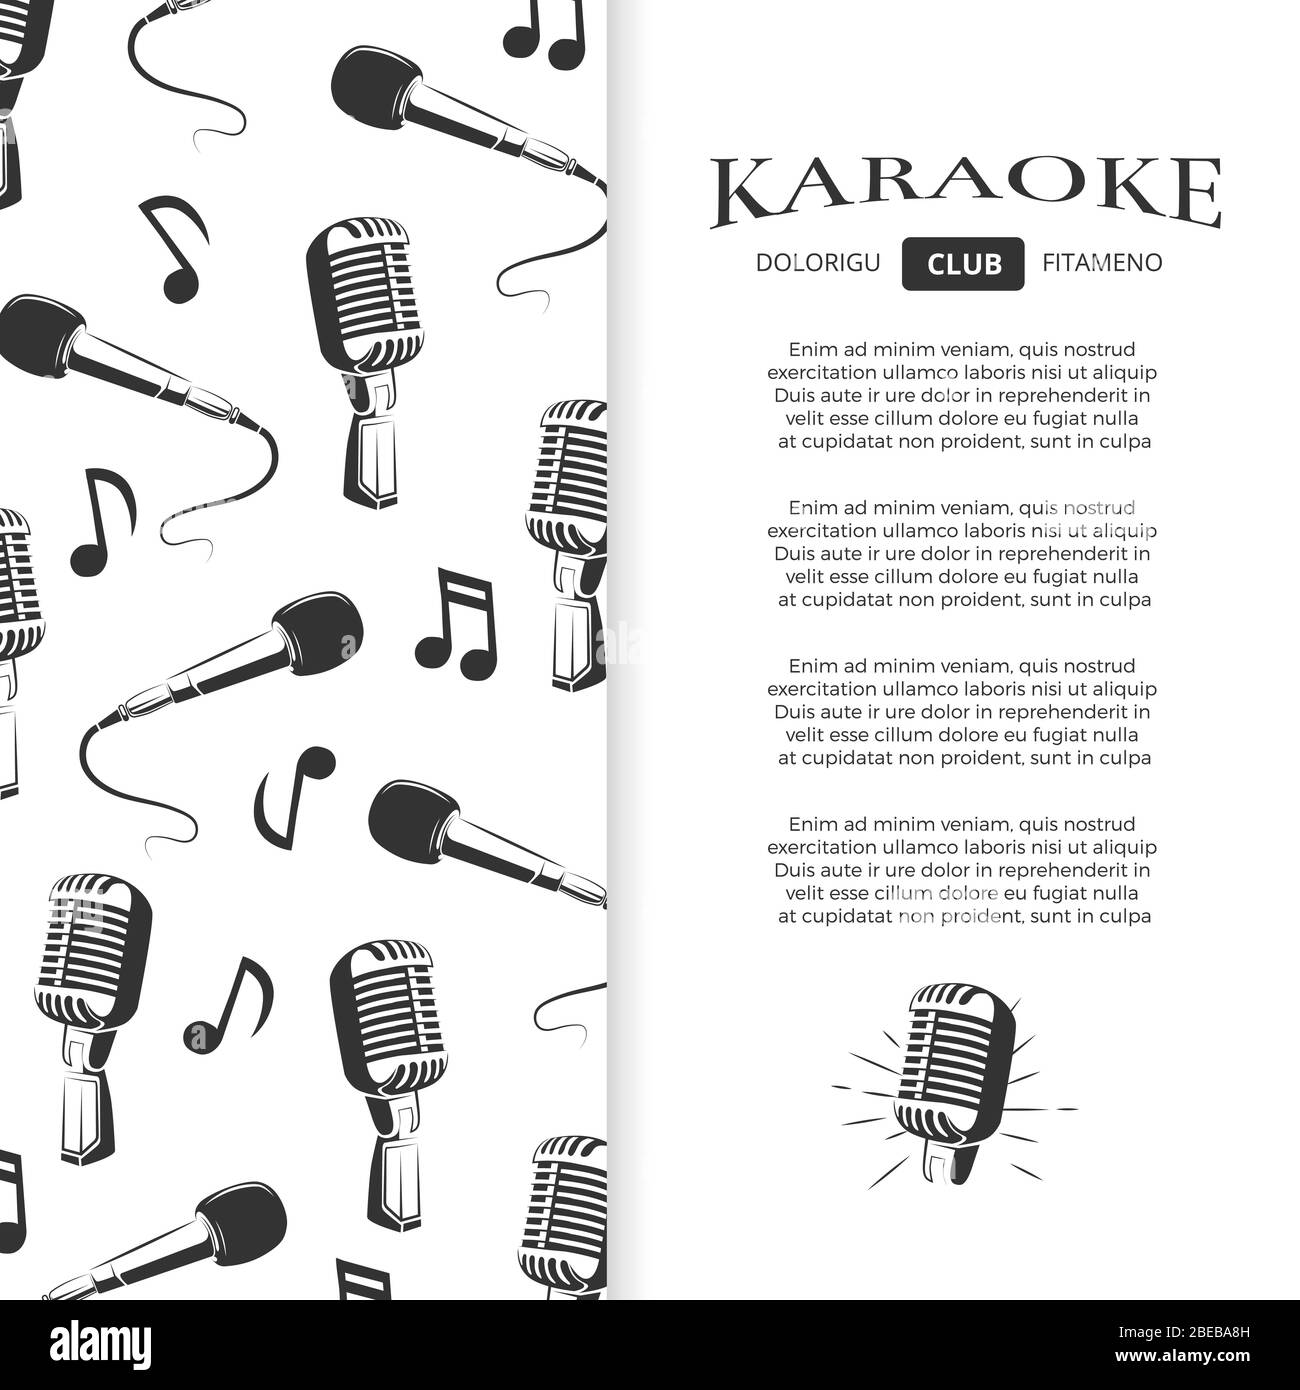 Karaoke Club Prospektdesign - Musikbanner mit Mikrofonen. Vektorgrafik Stock Vektor